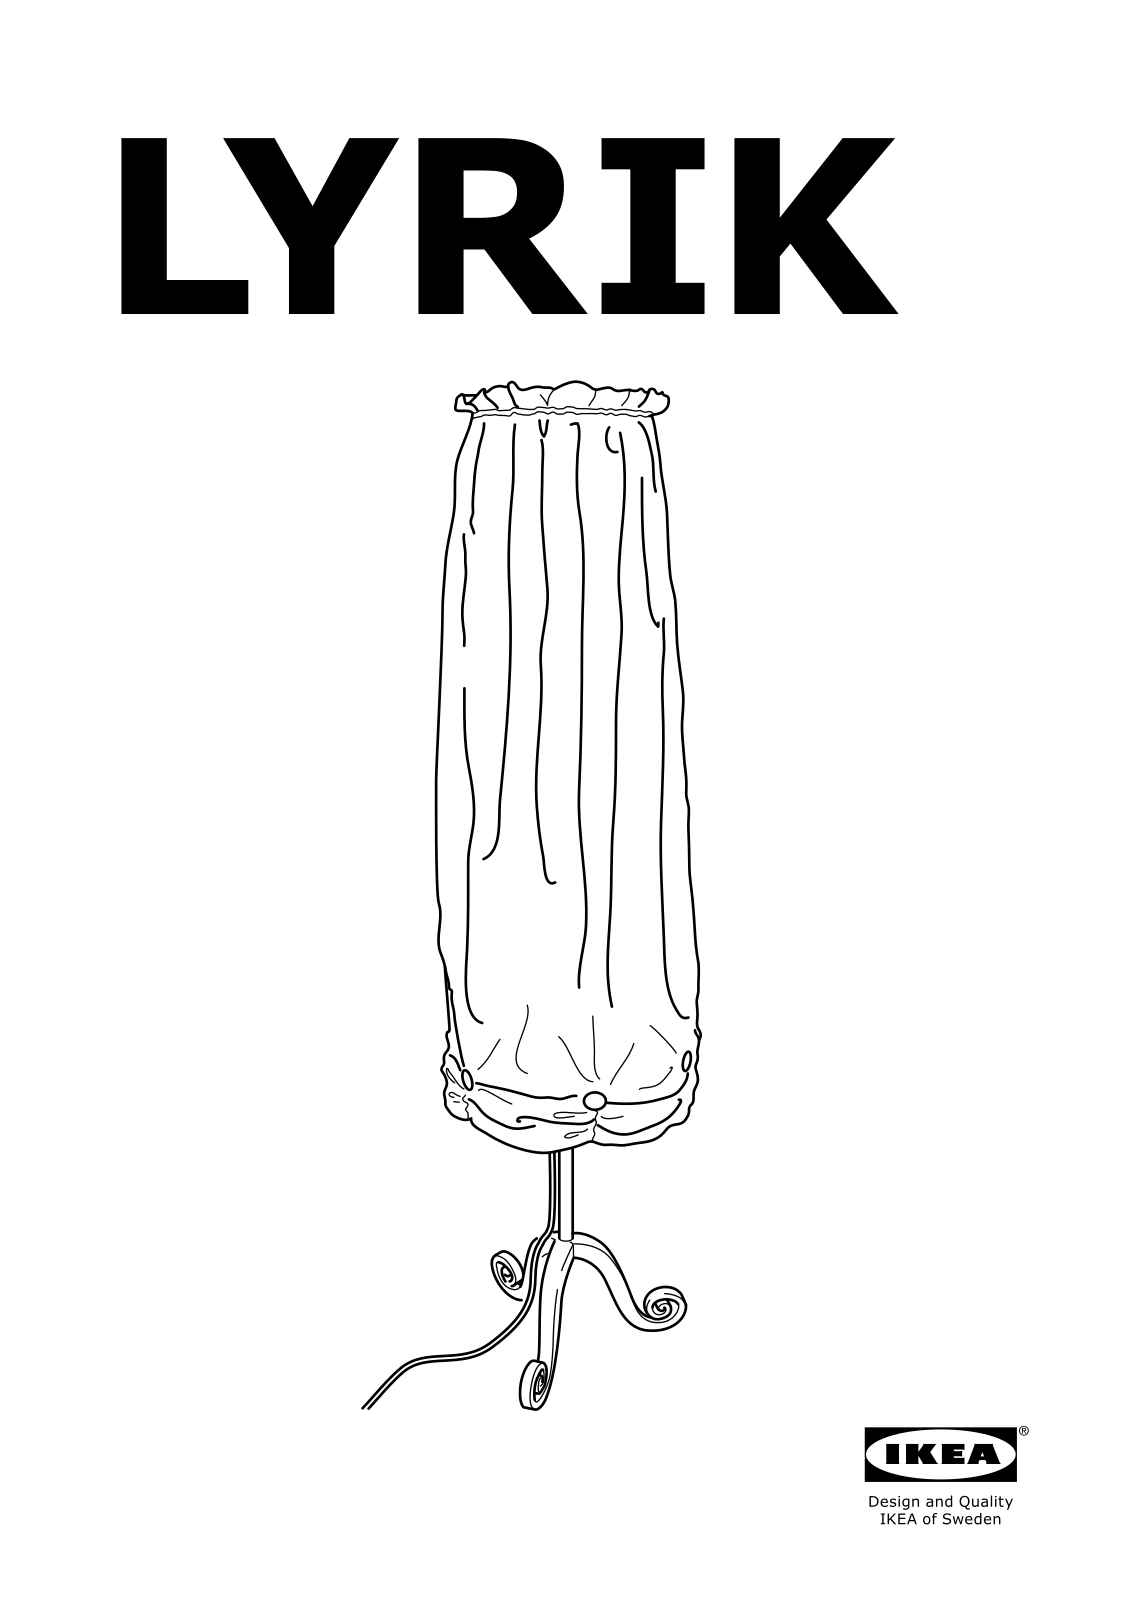 IKEA LYRIK User Manual